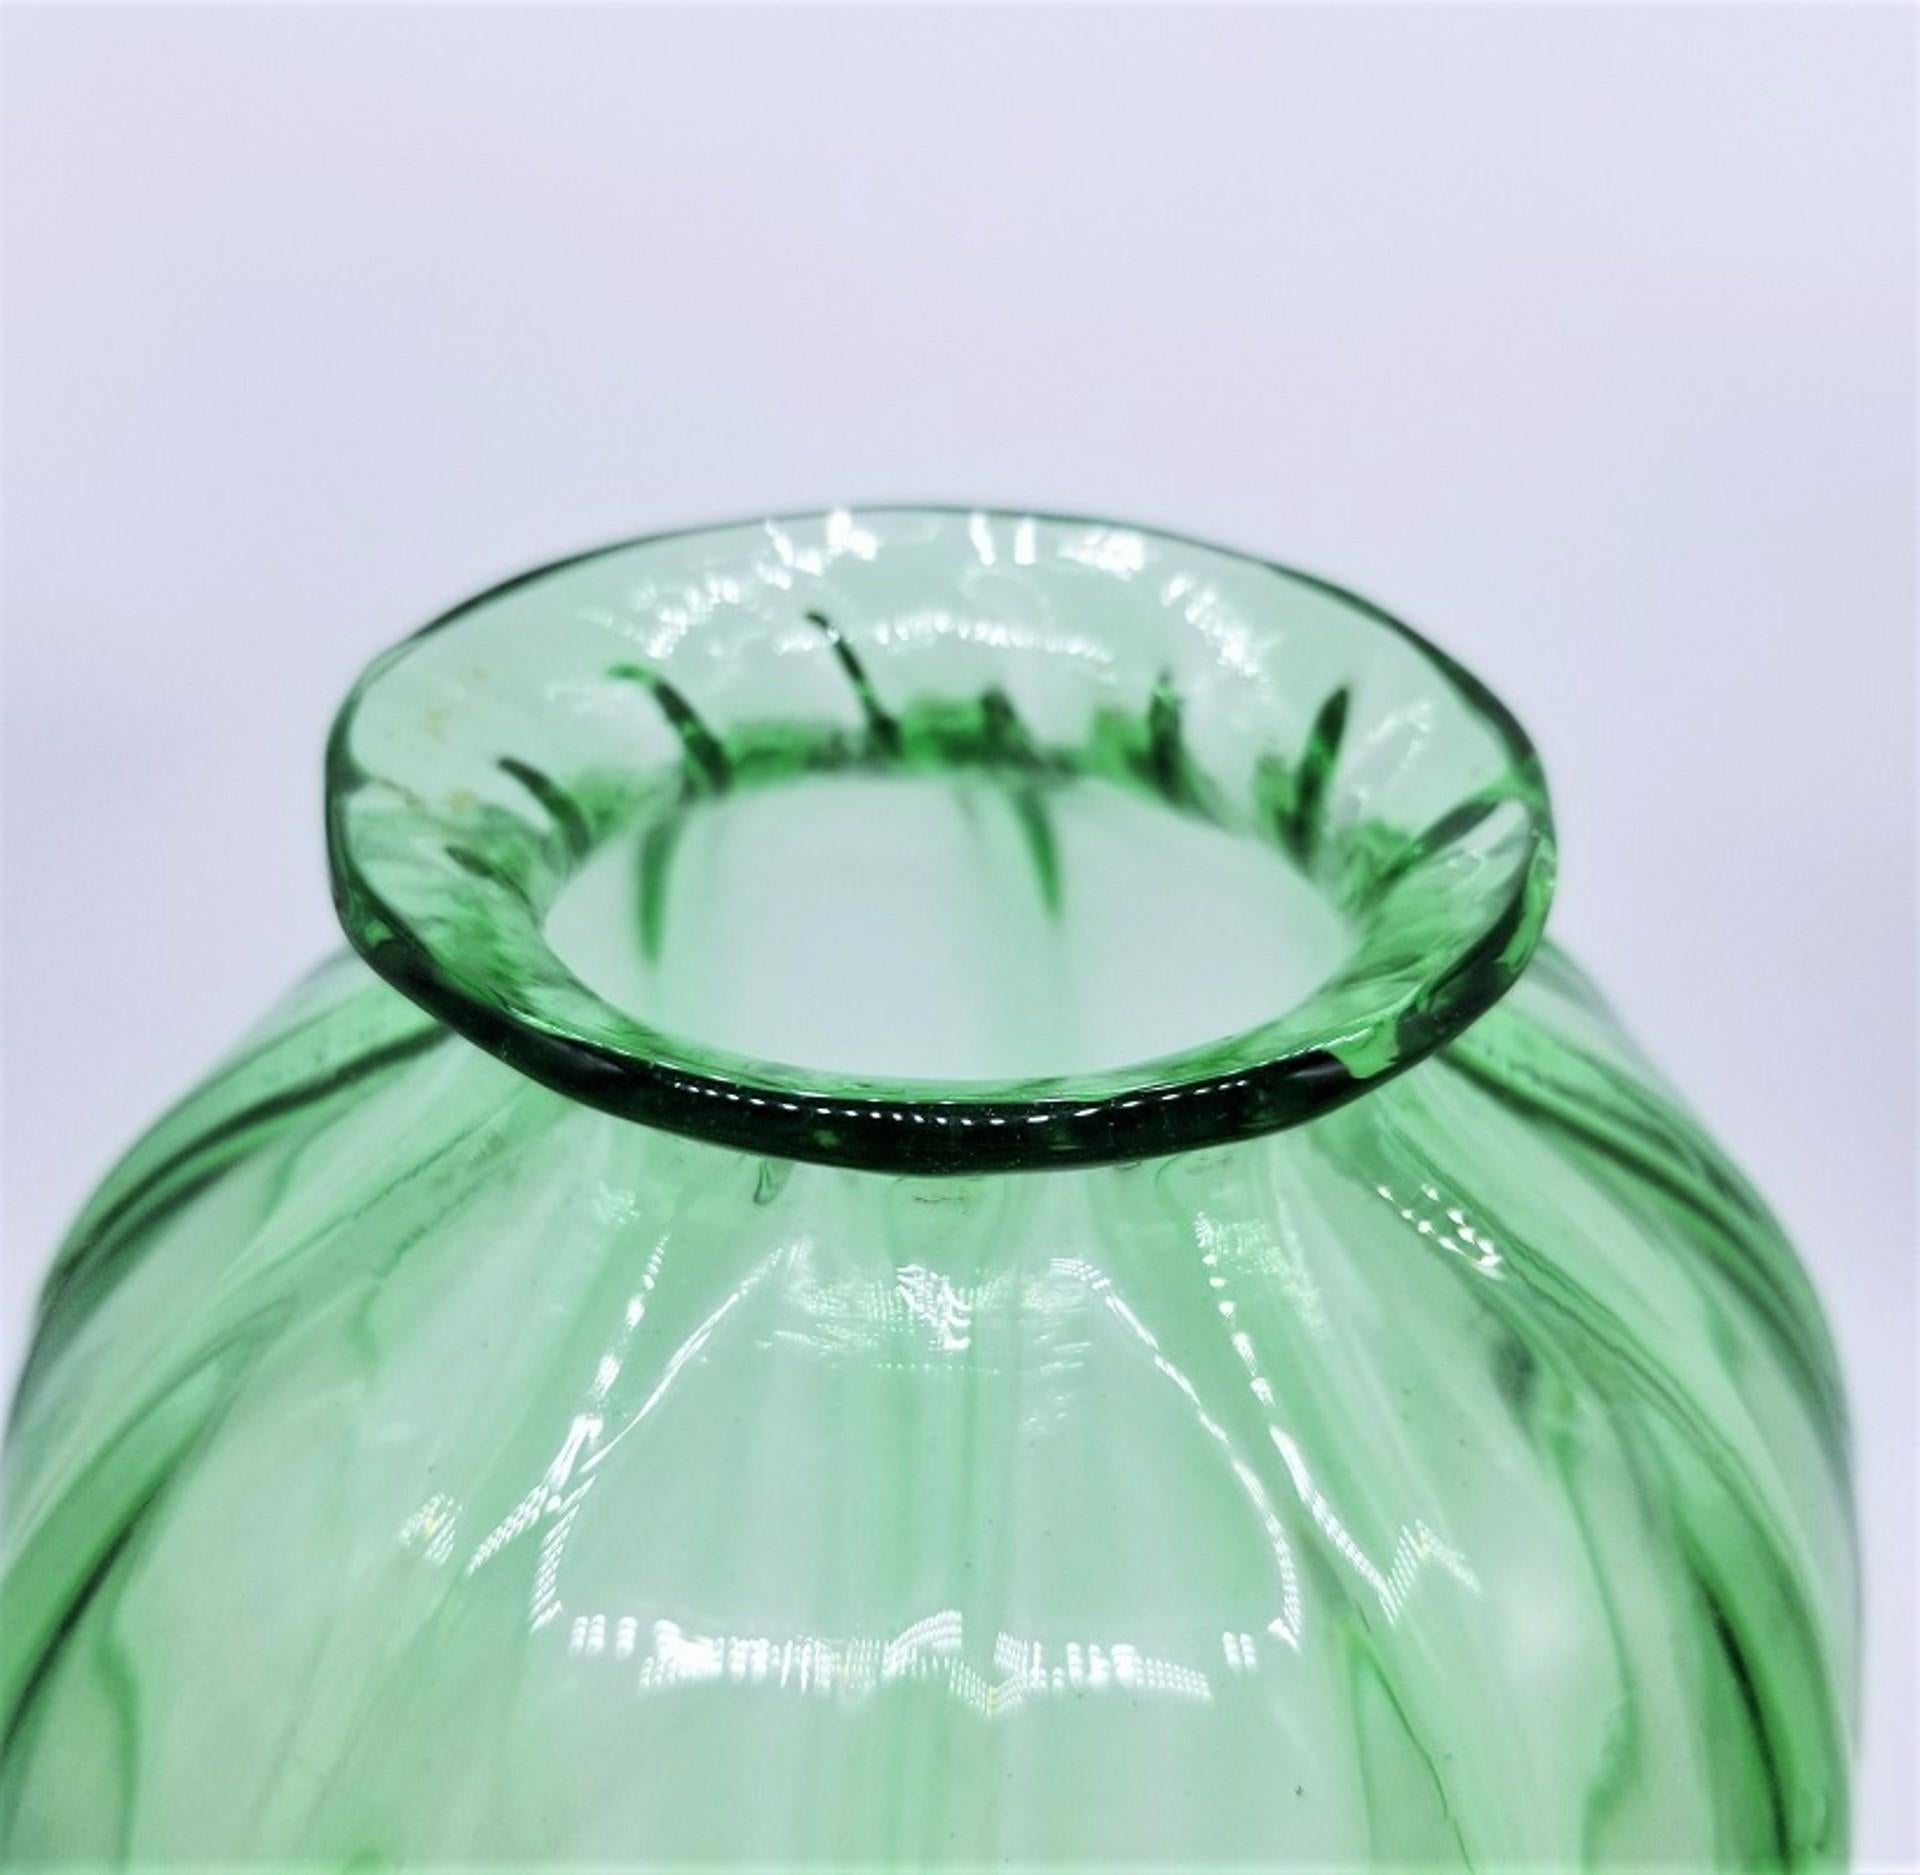 Verre de Murano
Vase Costolato vert clair, vers 1930
Verre soufflé
13,25 x 6,25 x 6,25 pouces